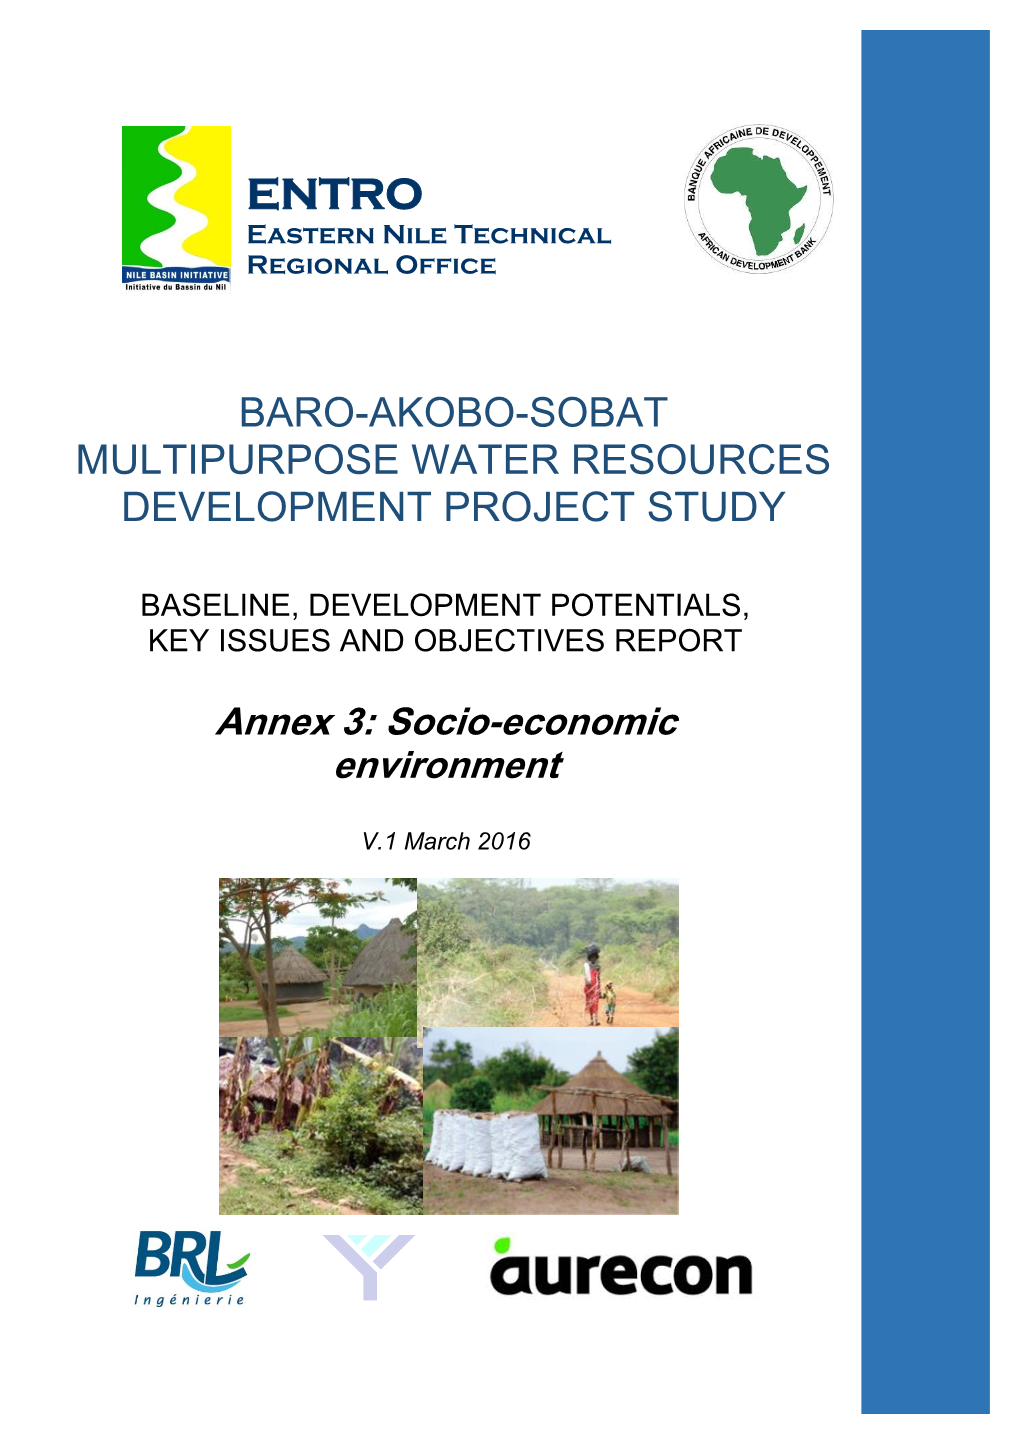 Baro-Akobo-Sobat Multipurpose Water Resources Development Project Study